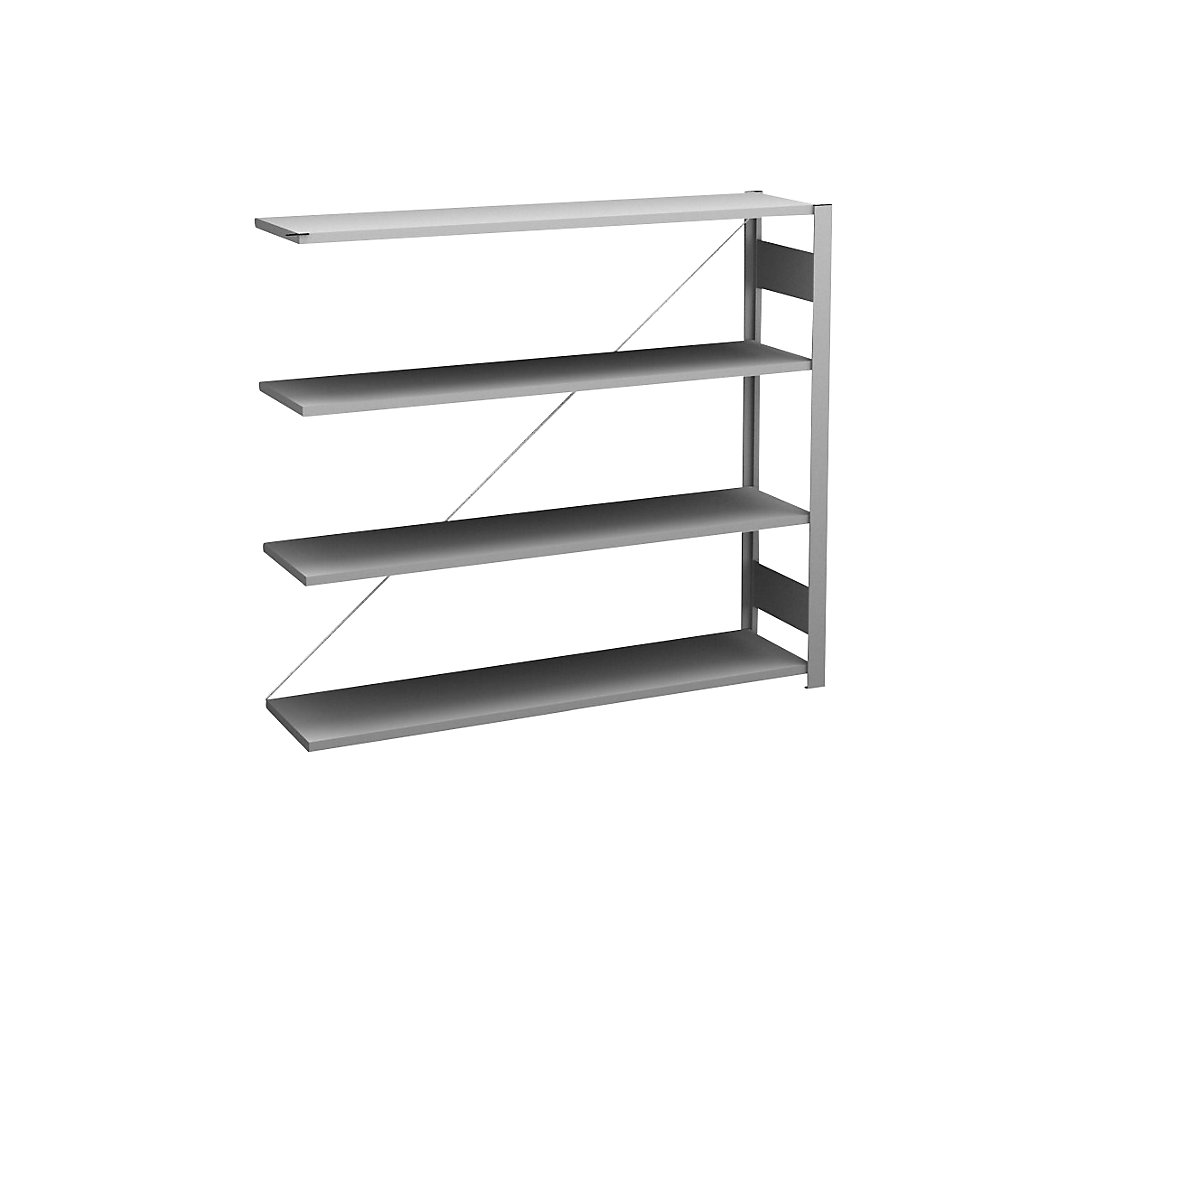 Zinc plated sideboard shelving unit – hofe, height 1200 mm, 4 shelves, extension shelf unit, shelf depth 400 mm, max. shelf load 140 kg-10